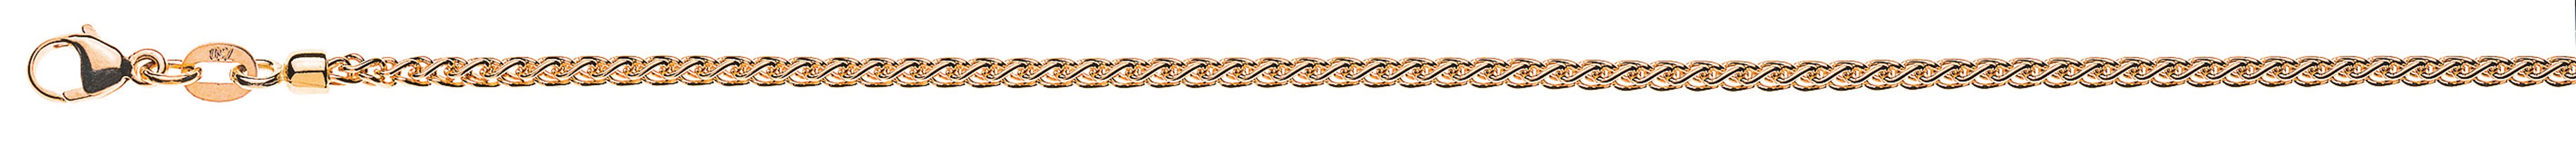 AURONOS Prestige Collier chaîne en or rose 18K 42cm 2.15mm